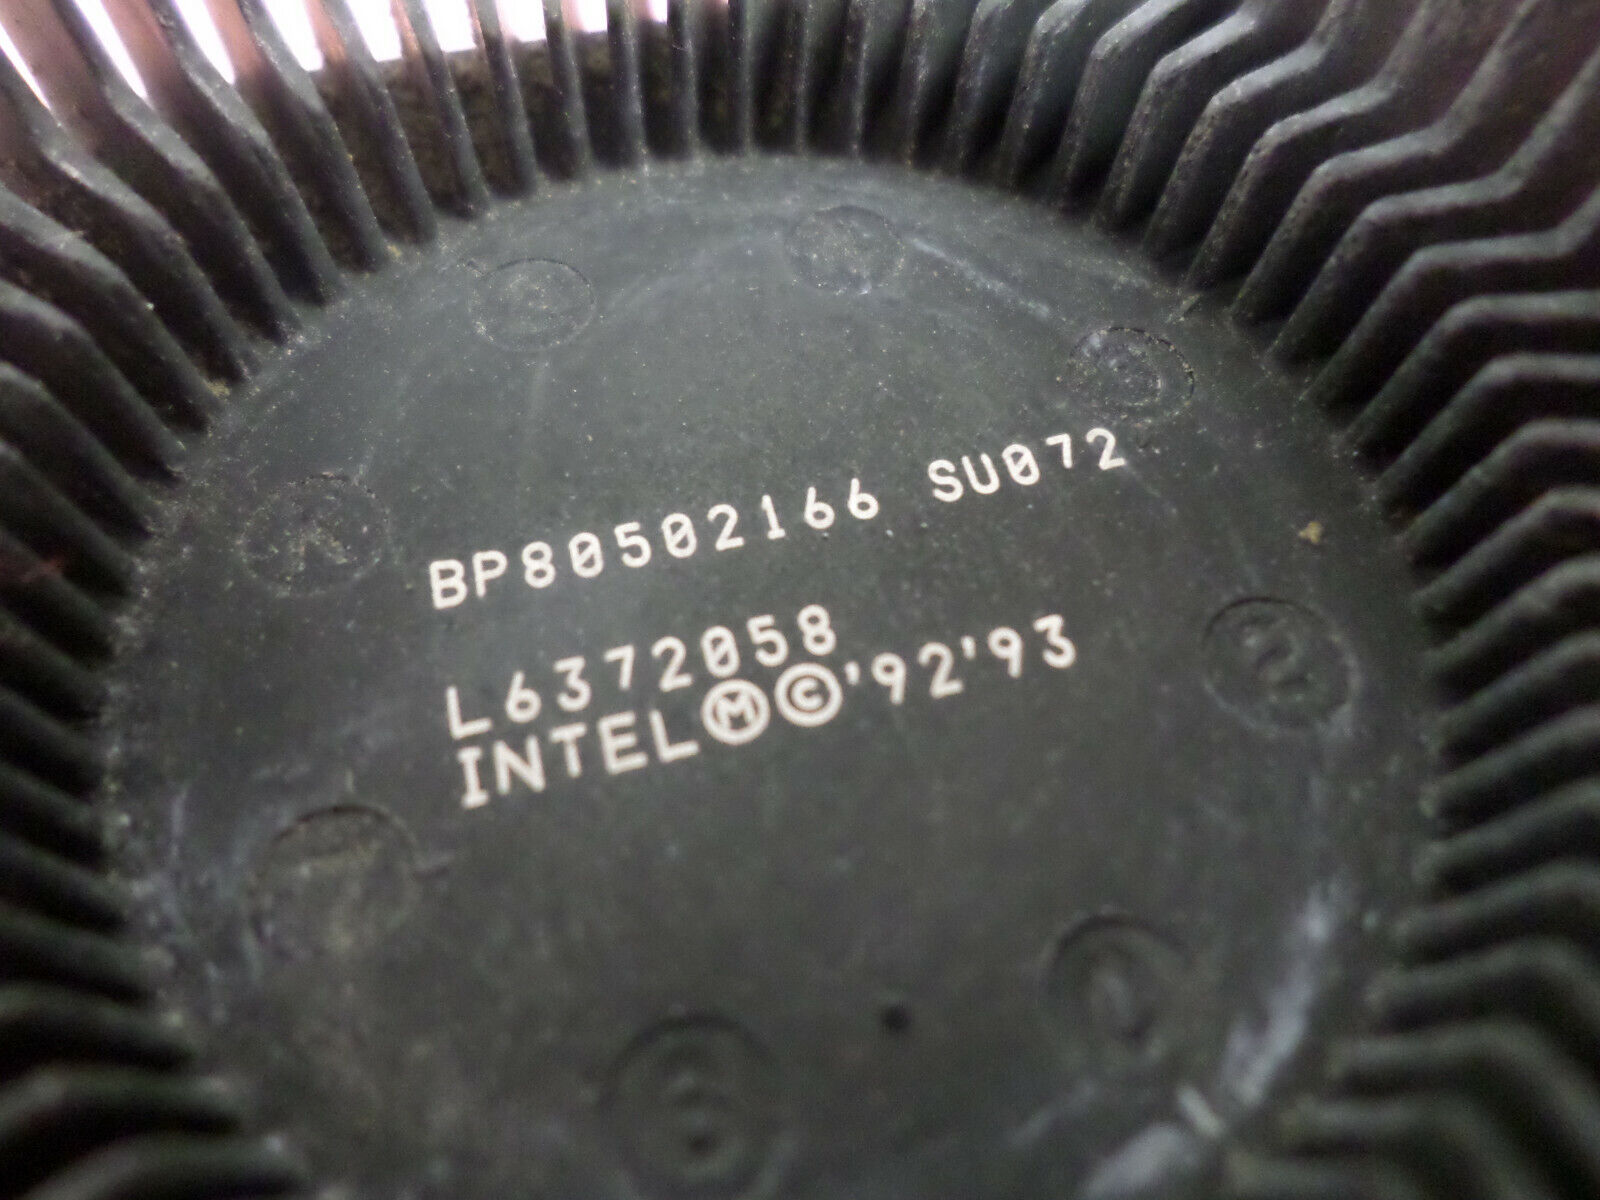 Very RARE Intel BP80502166 SU07/VSS Processor Genuine Original OEM 